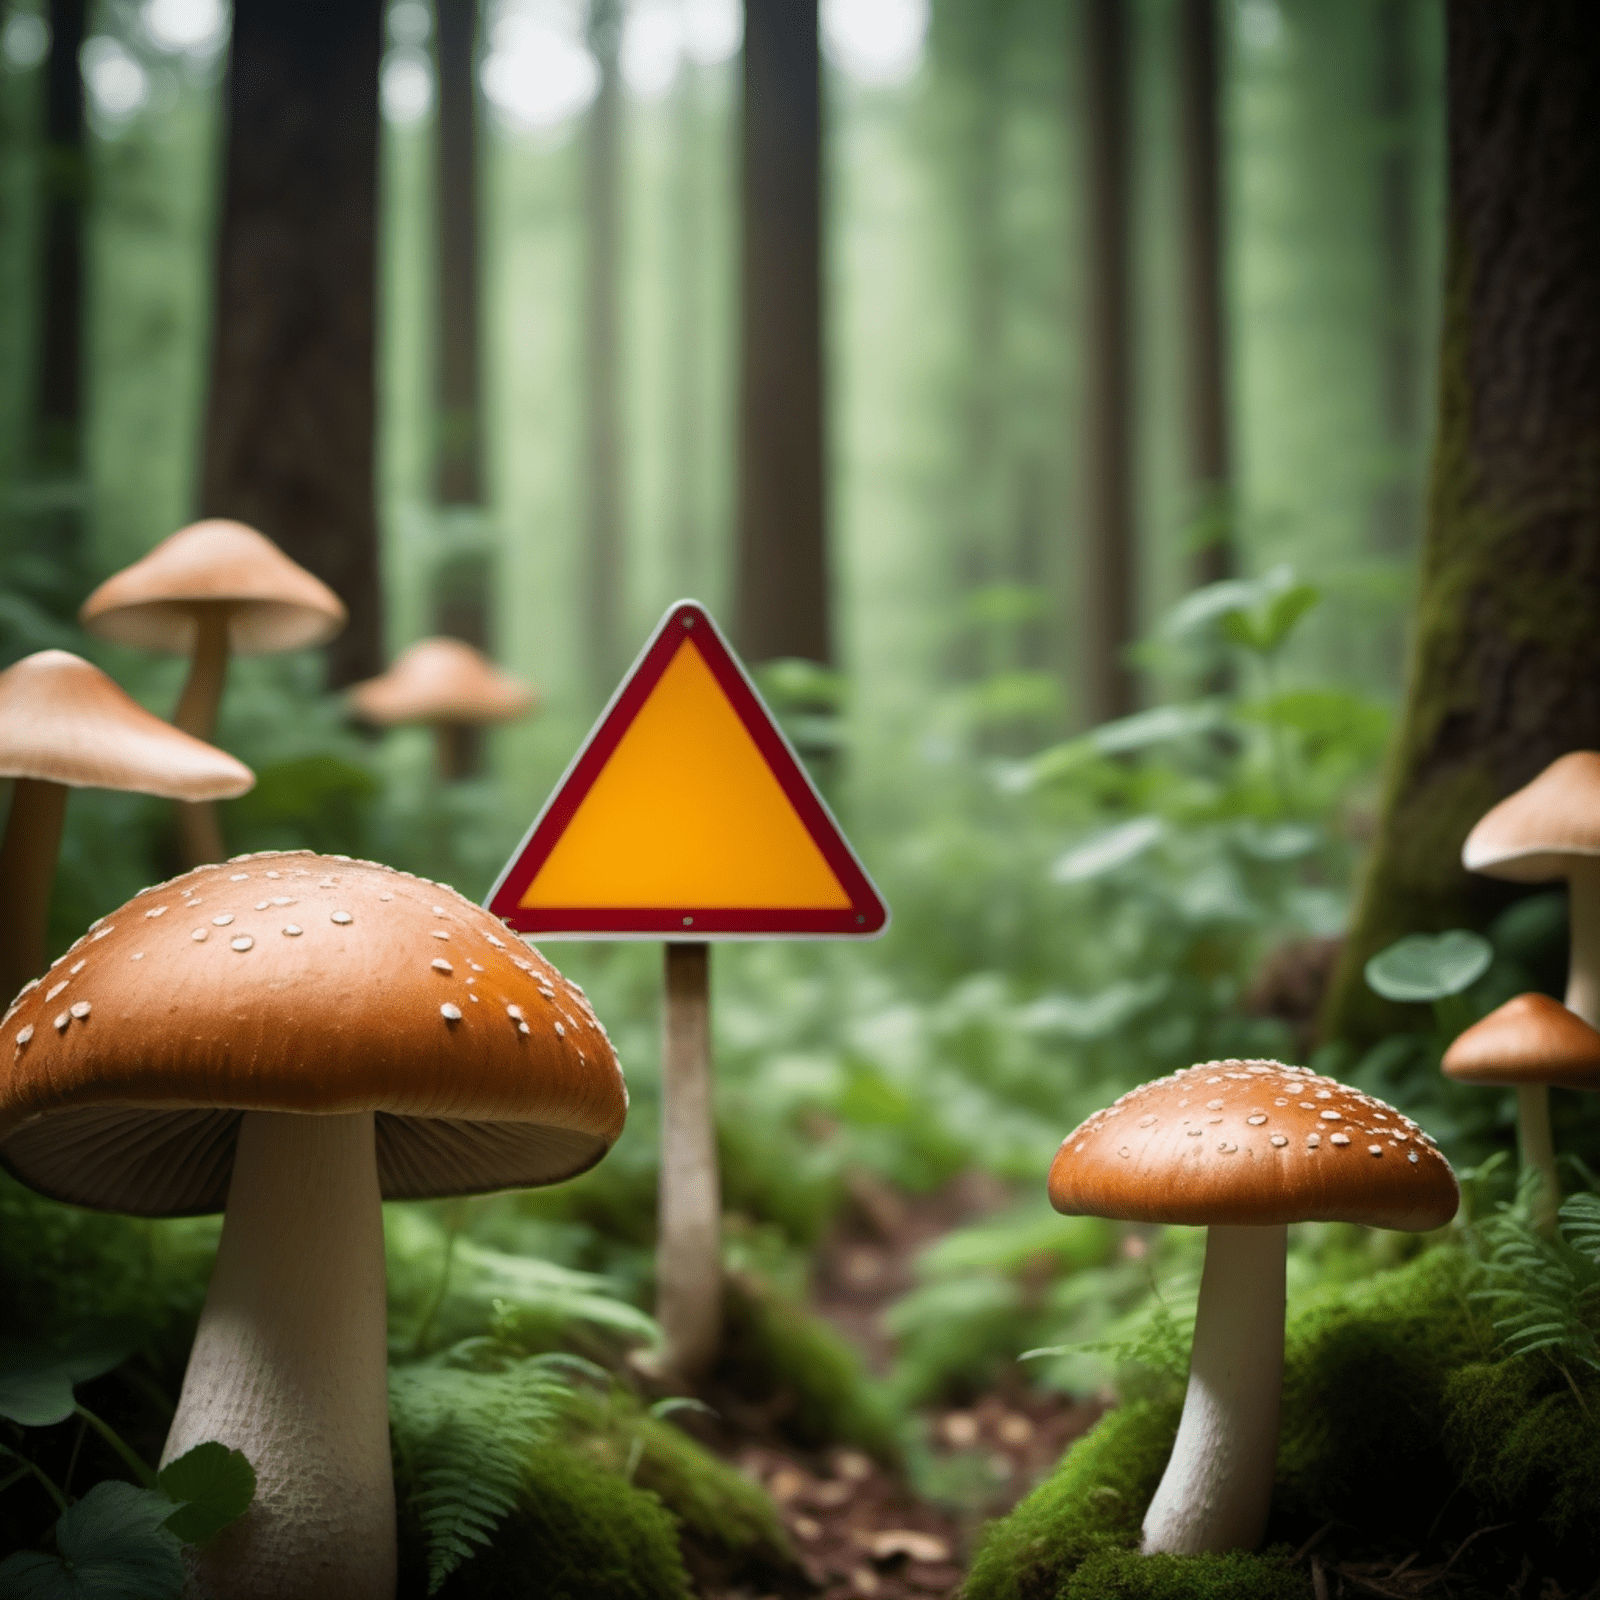 Is it safe to eat magic mushrooms